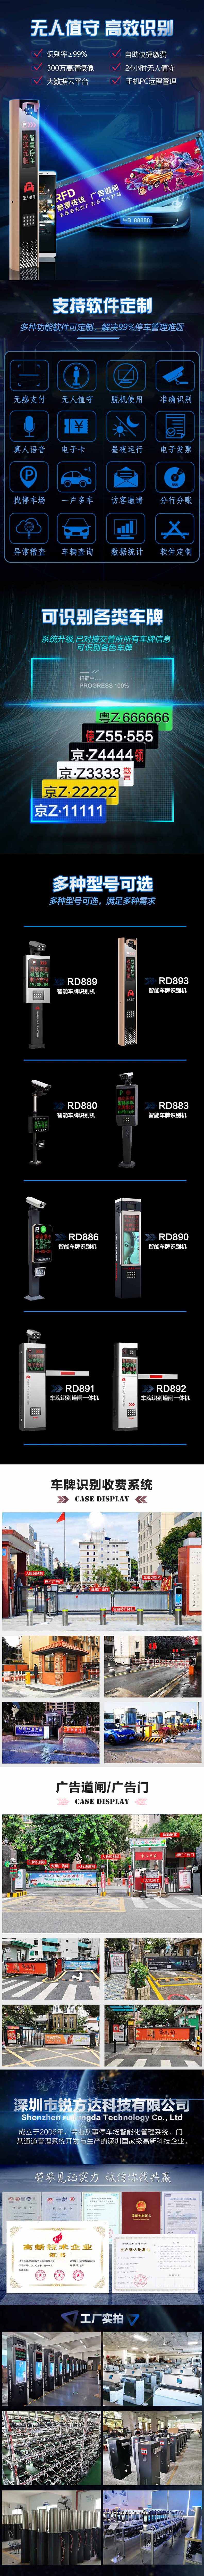 RD889車牌識別系統